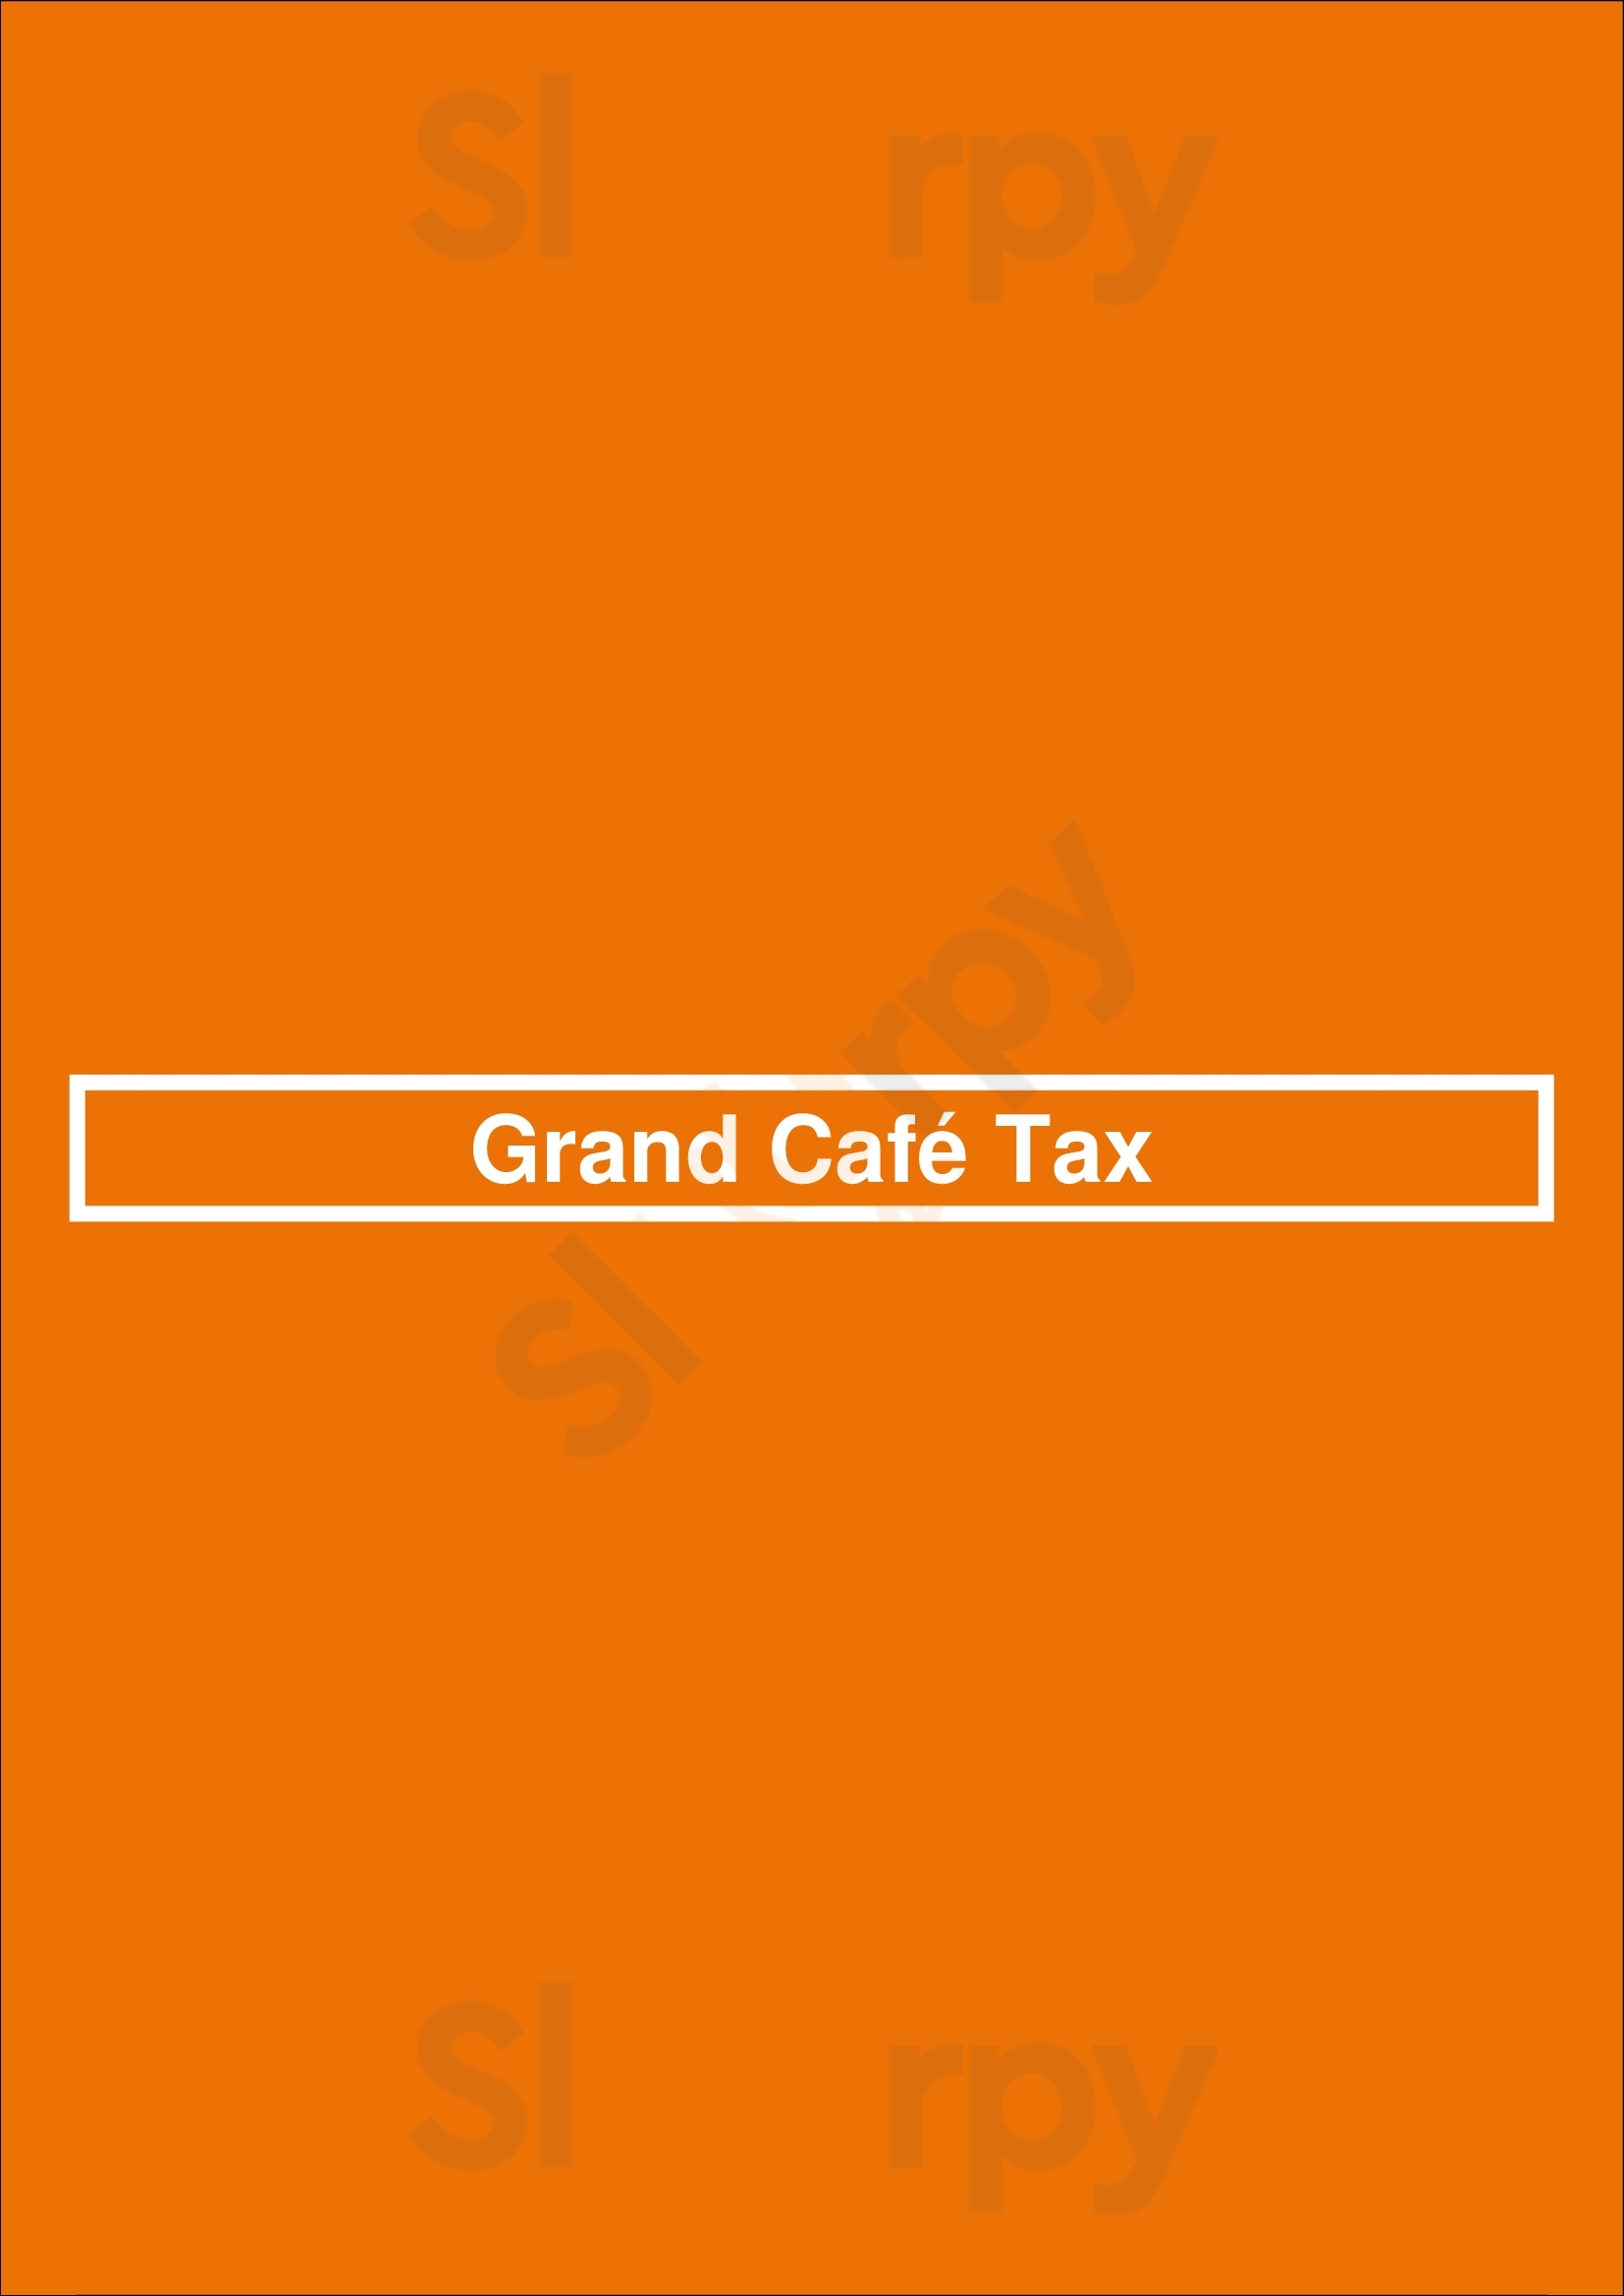 Grand Café Tax Gorinchem Menu - 1